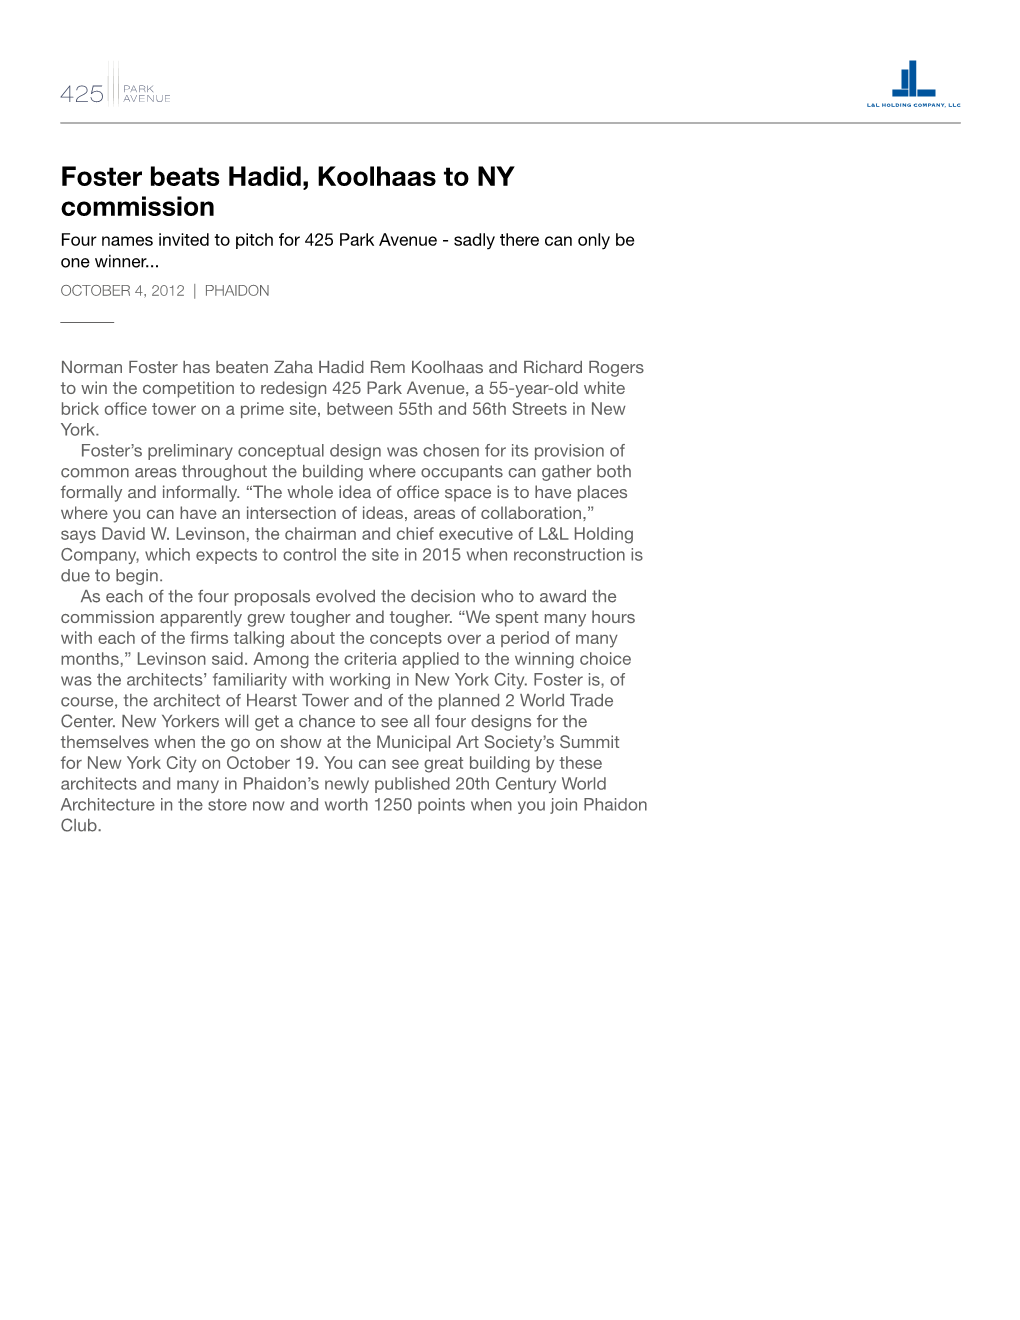 PHAIDON October 04, 2012 Foster Beats Hadid, Koolhaas to NY